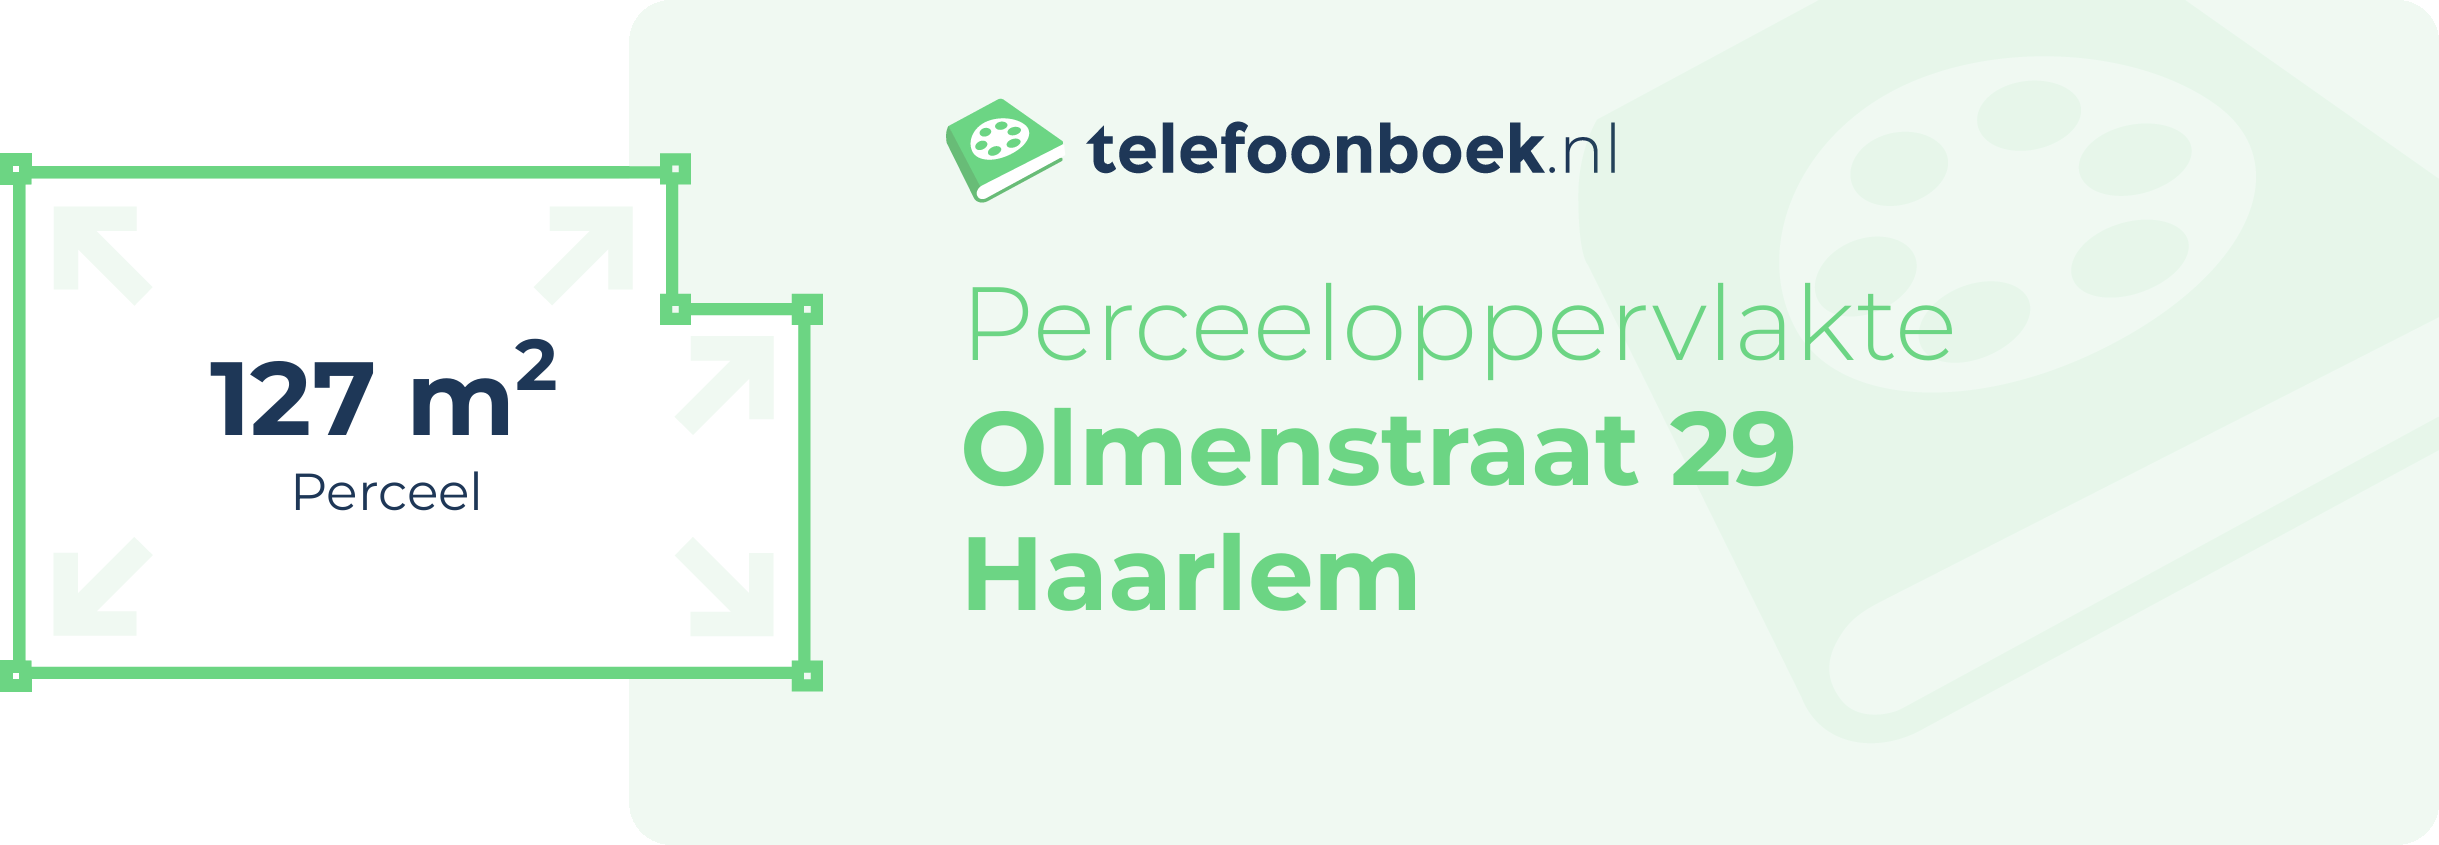 Perceeloppervlakte Olmenstraat 29 Haarlem